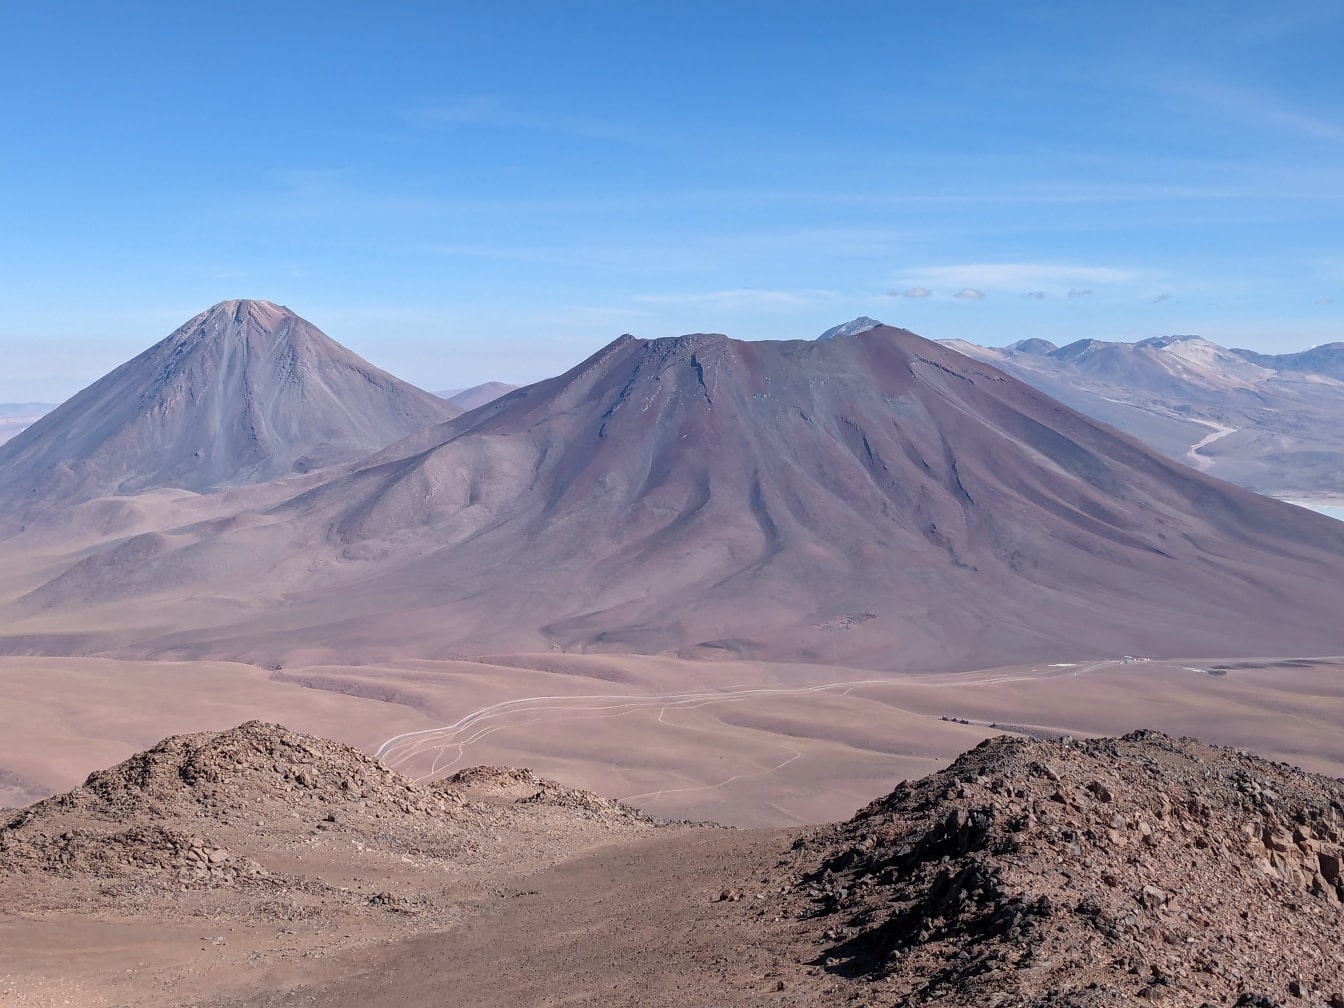 Panoramic views of the strato volcano Cerro Toco in the Atacama Desert in Chile